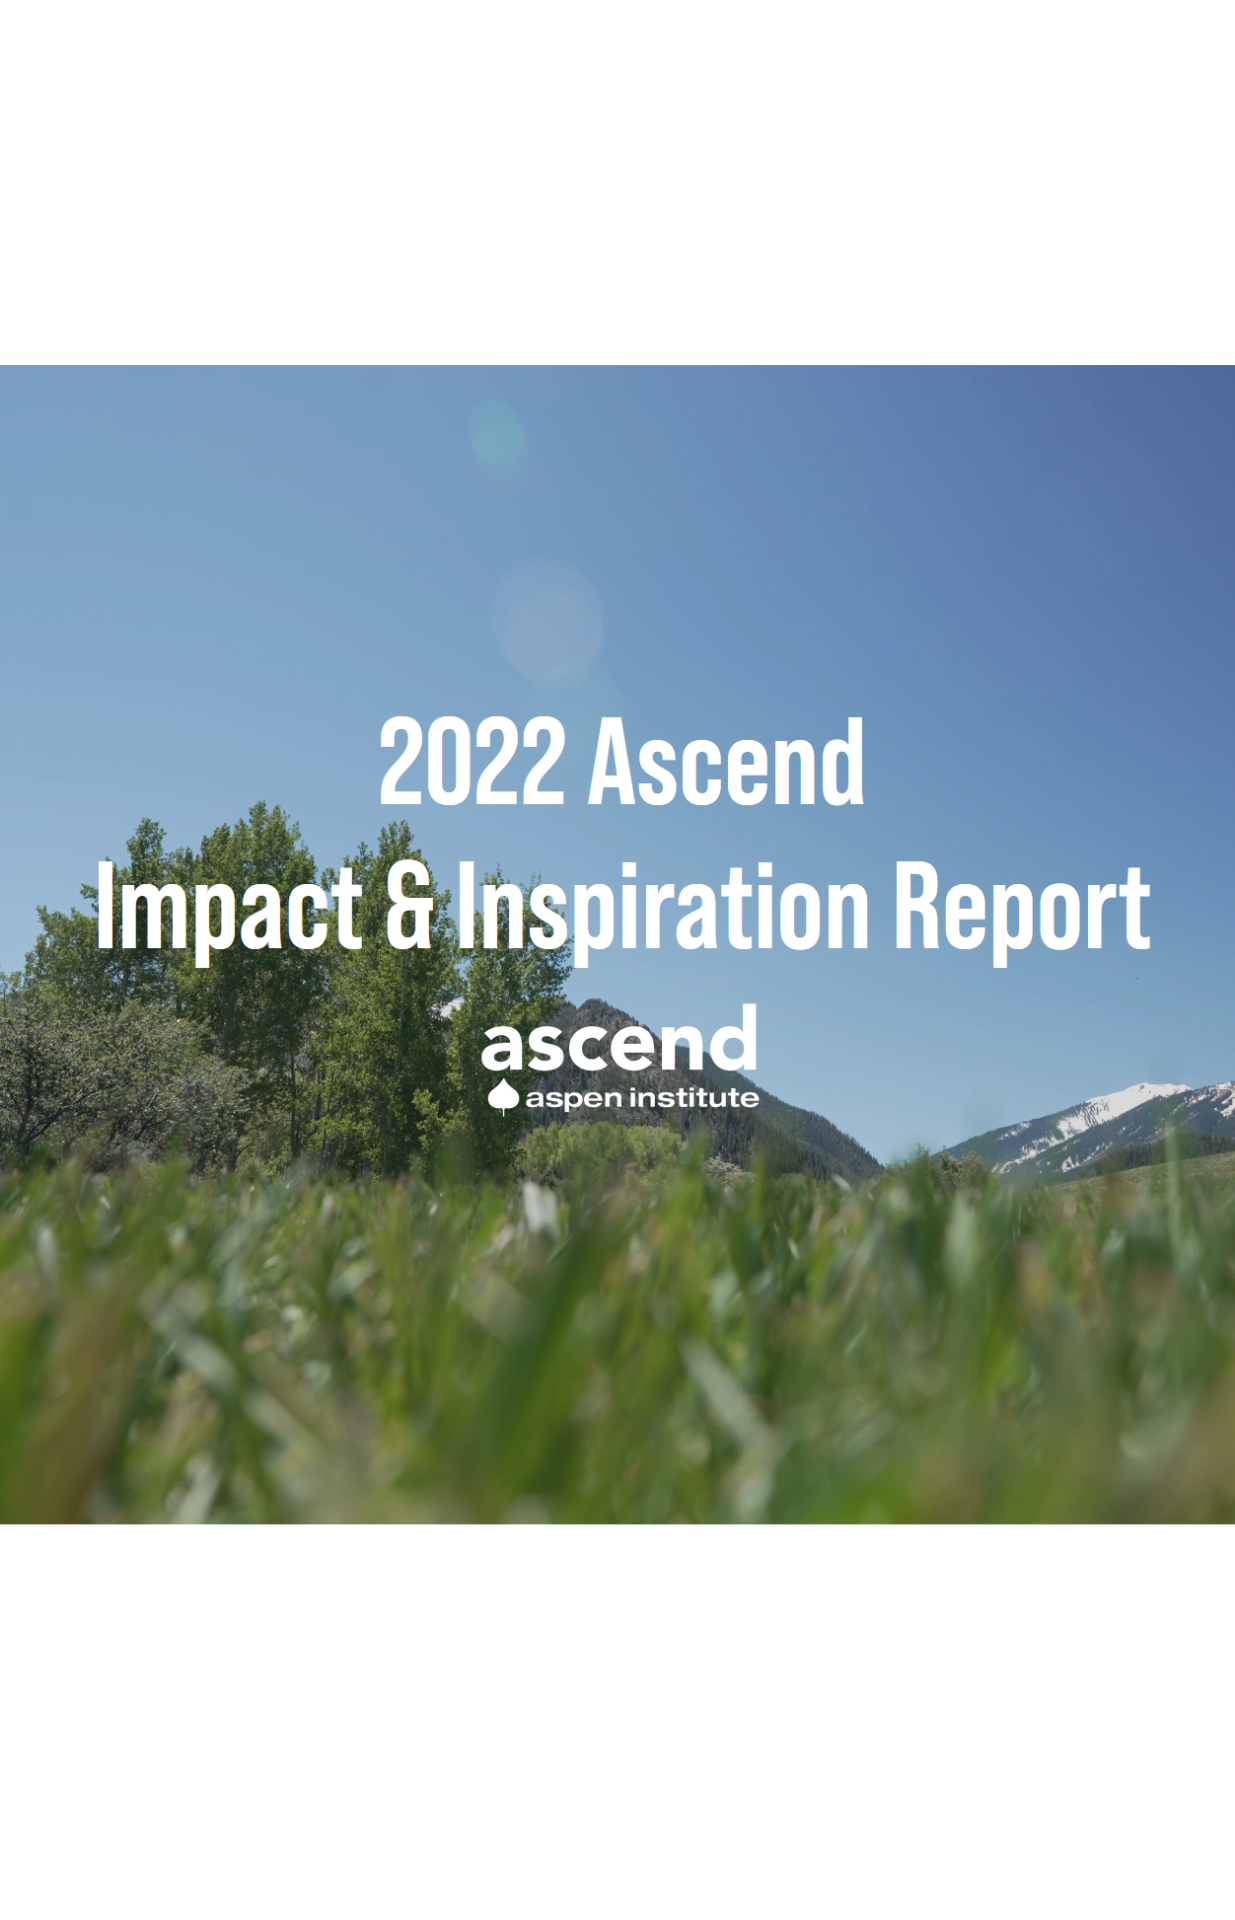 Ascend at the Aspen Institute Impact & Inspiration Report